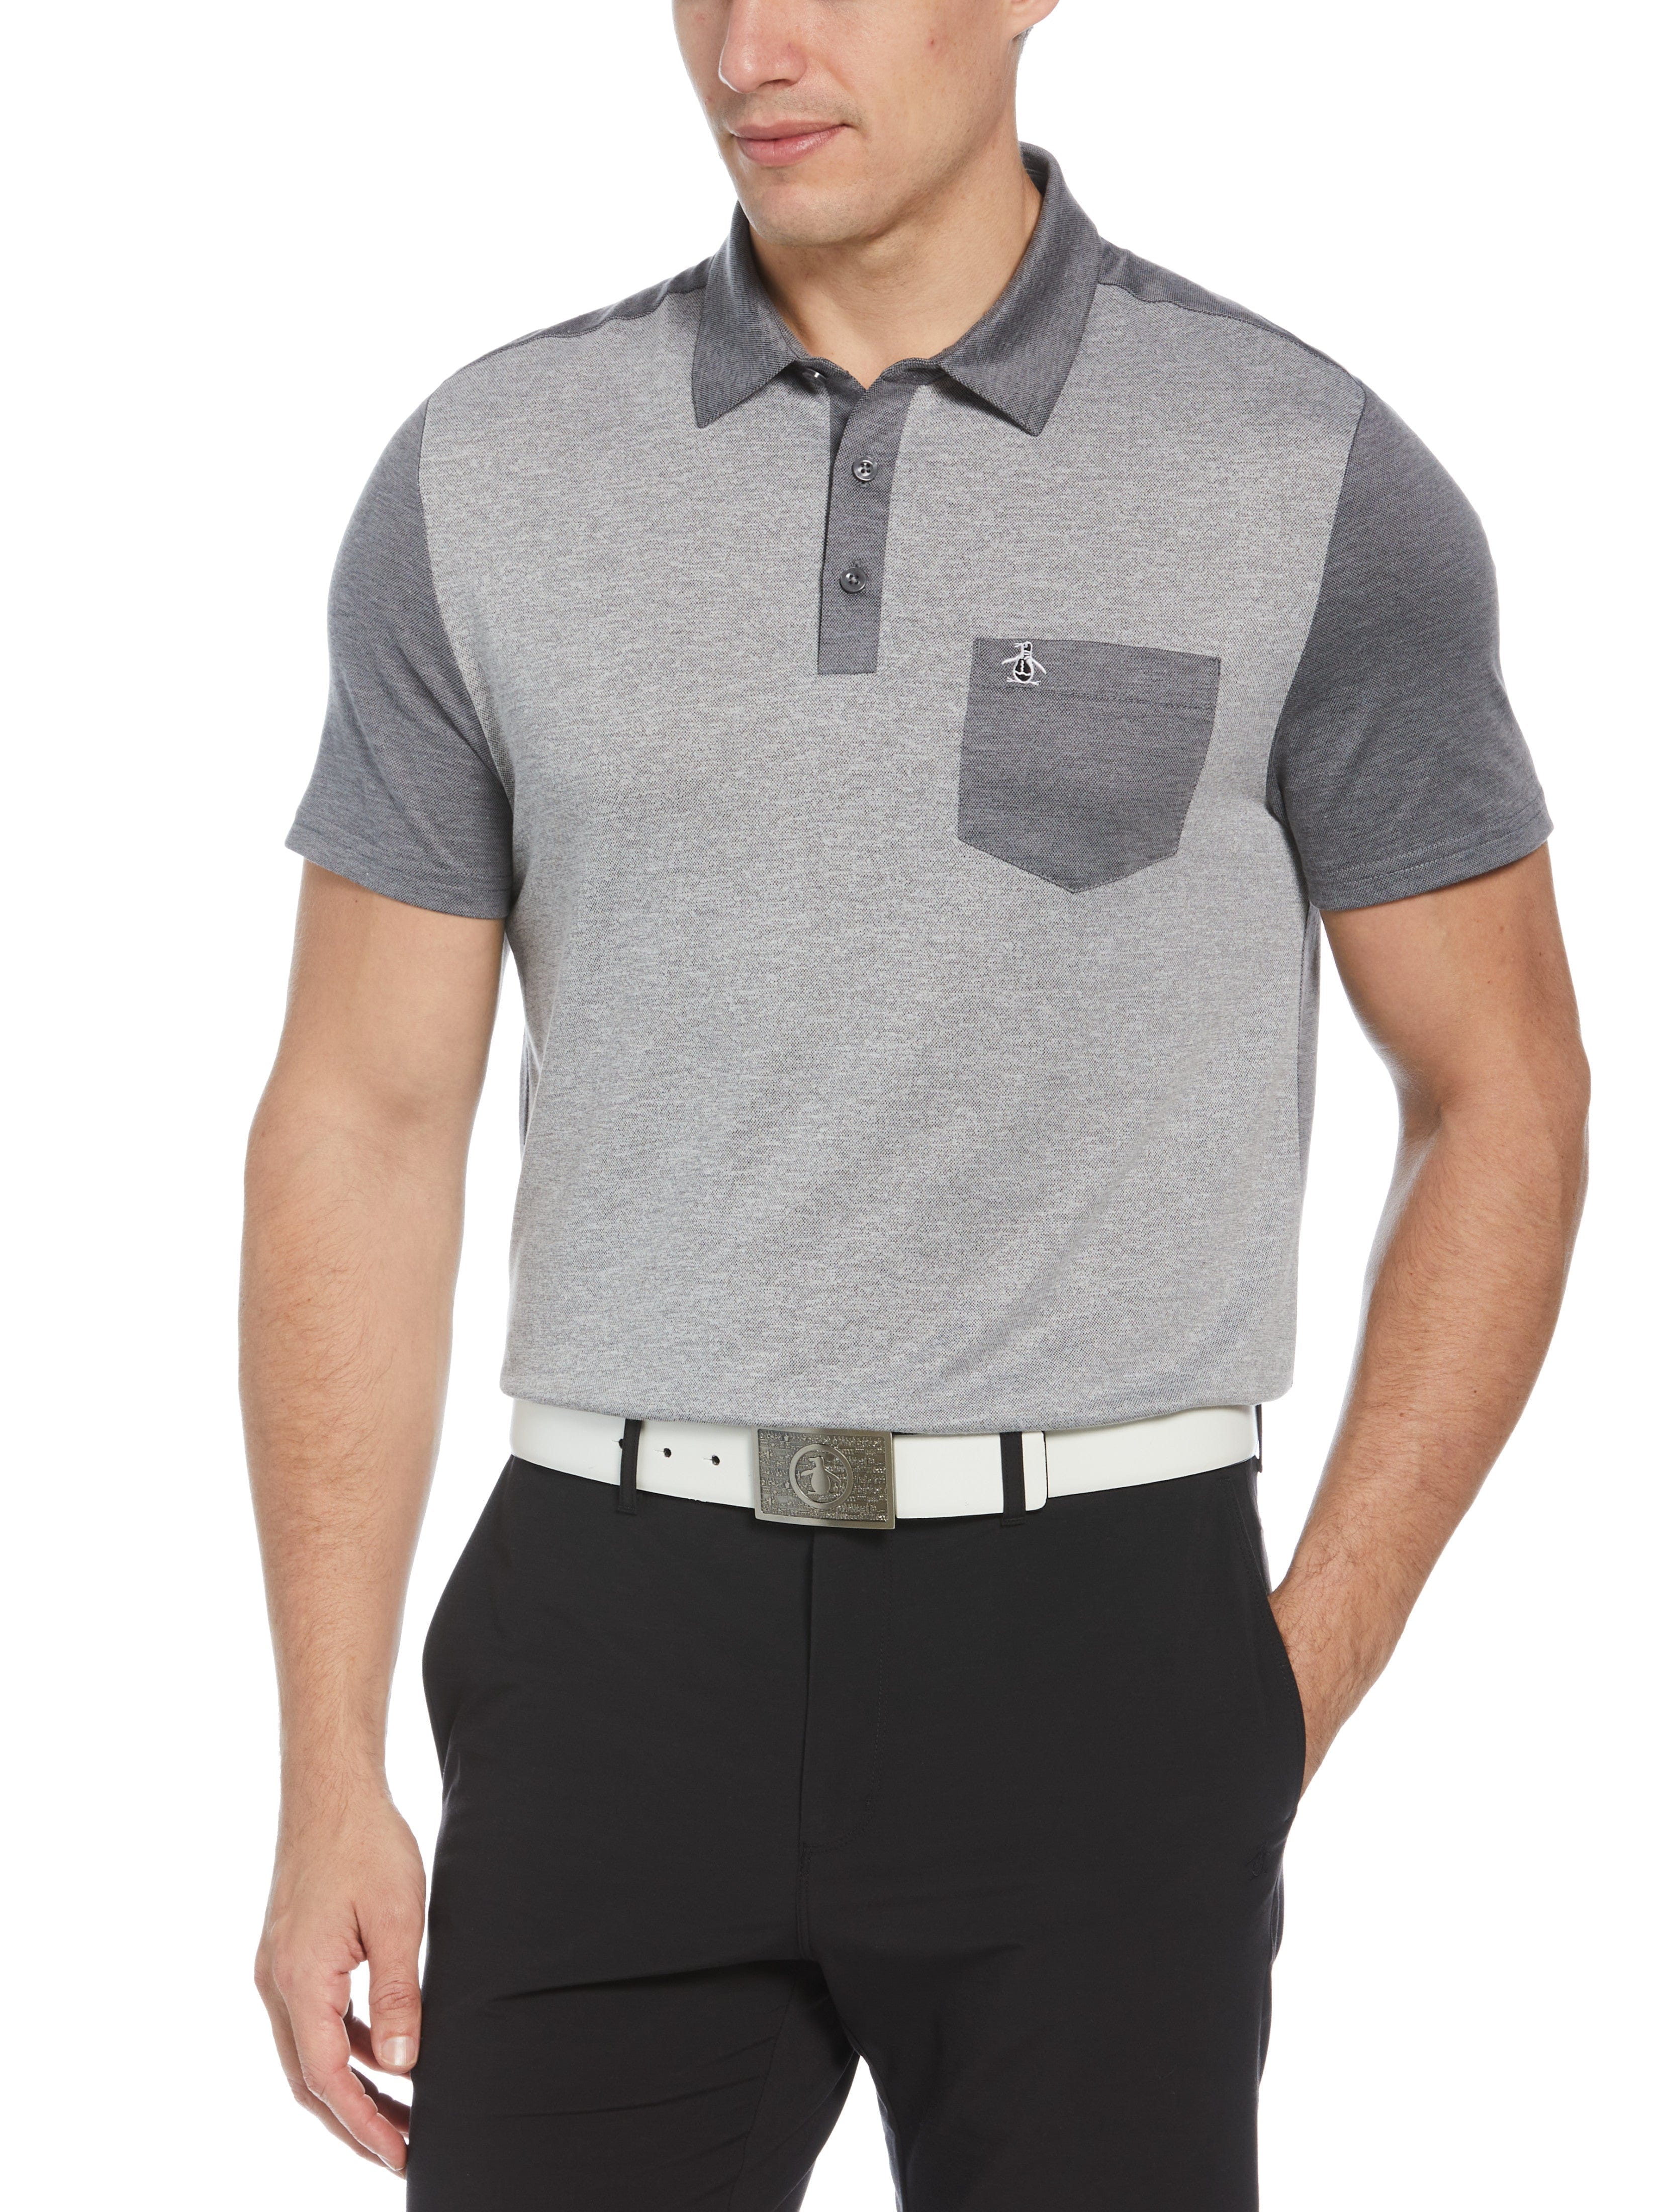 Original Penguin Mens Color Block Golf Polo Shirt, Size Small, Black, Polyester/Recycled Polyester/Cotton | Golf Apparel Shop